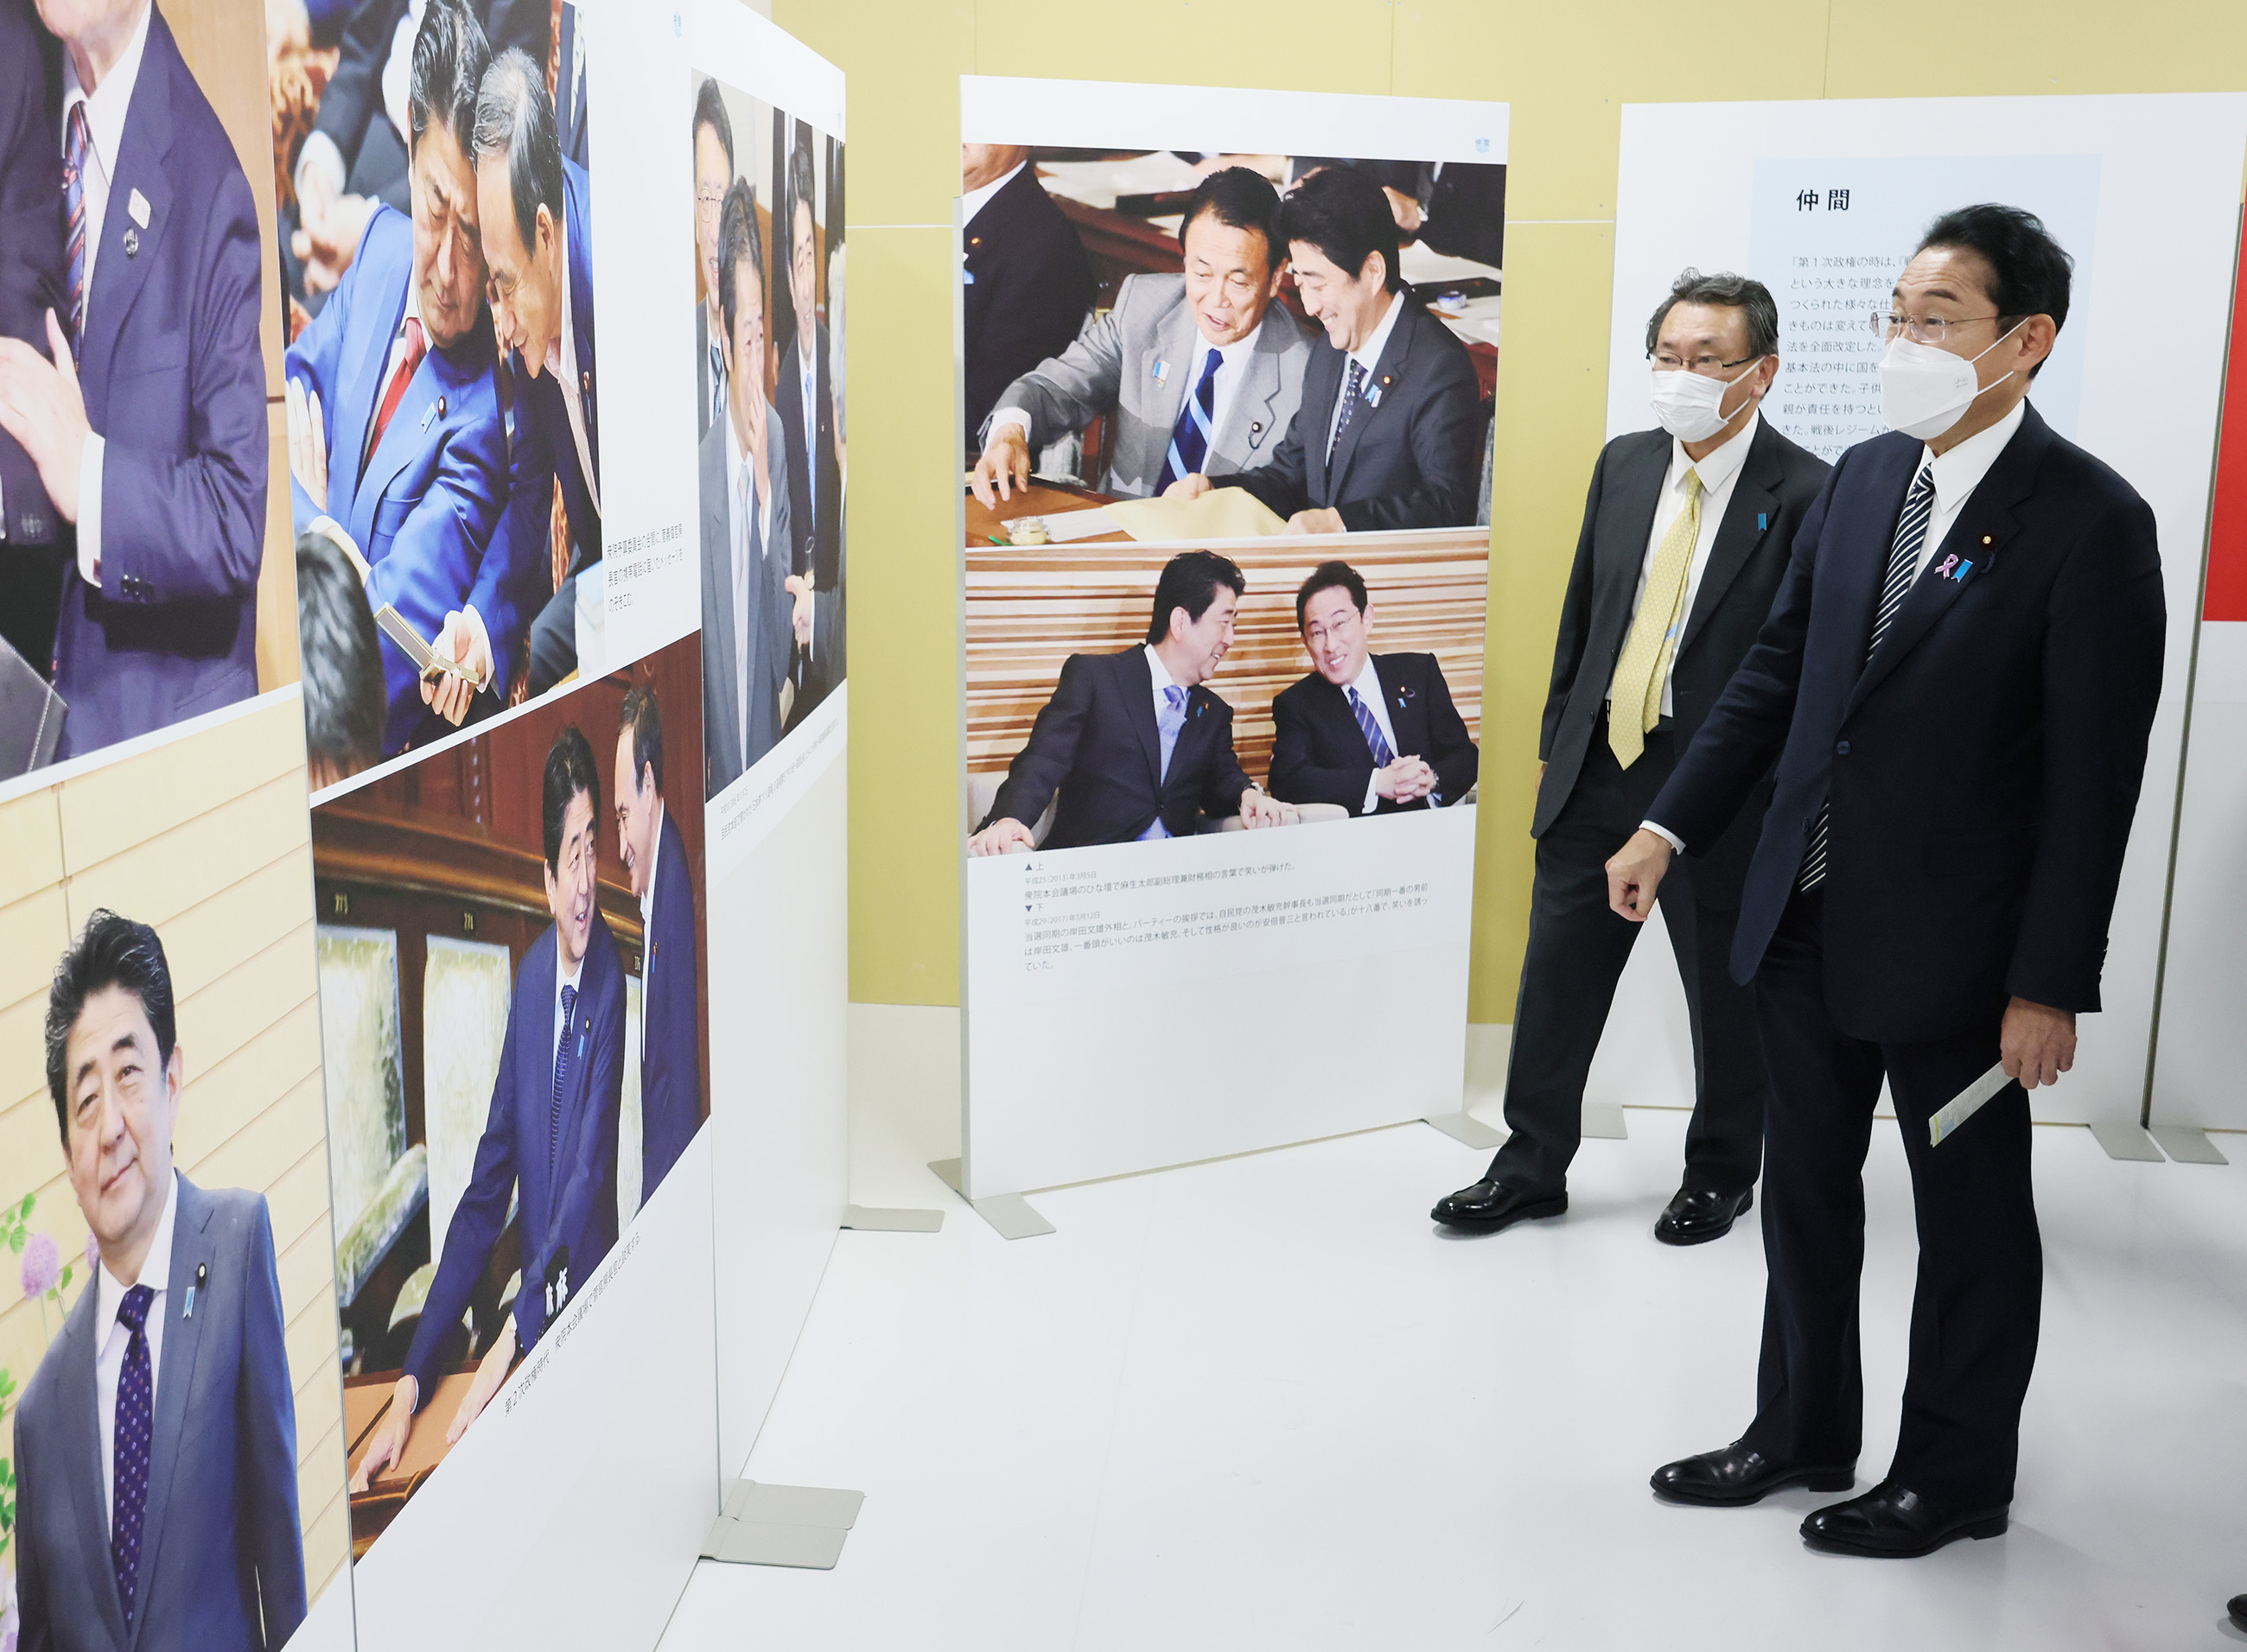 Photo Exhibition “ABE Shinzo: A Politician Steadfast and Spirited”